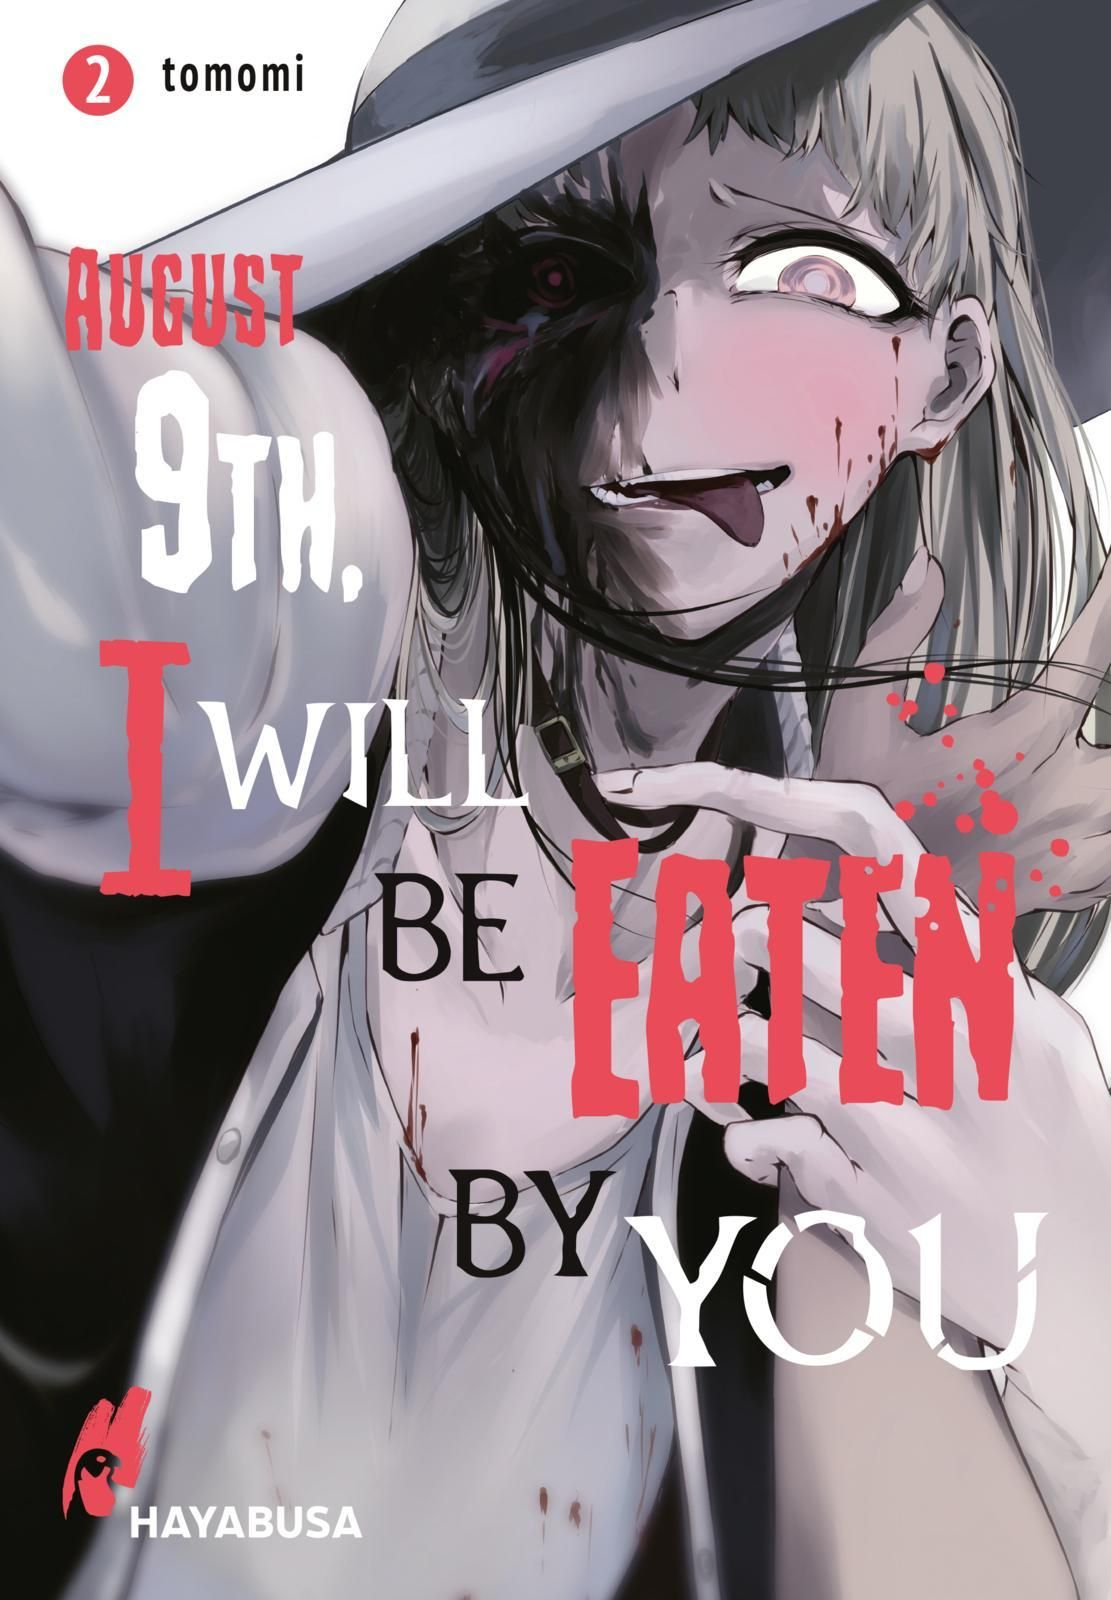 August 9th, I will be eat 02 Manga (Neu)